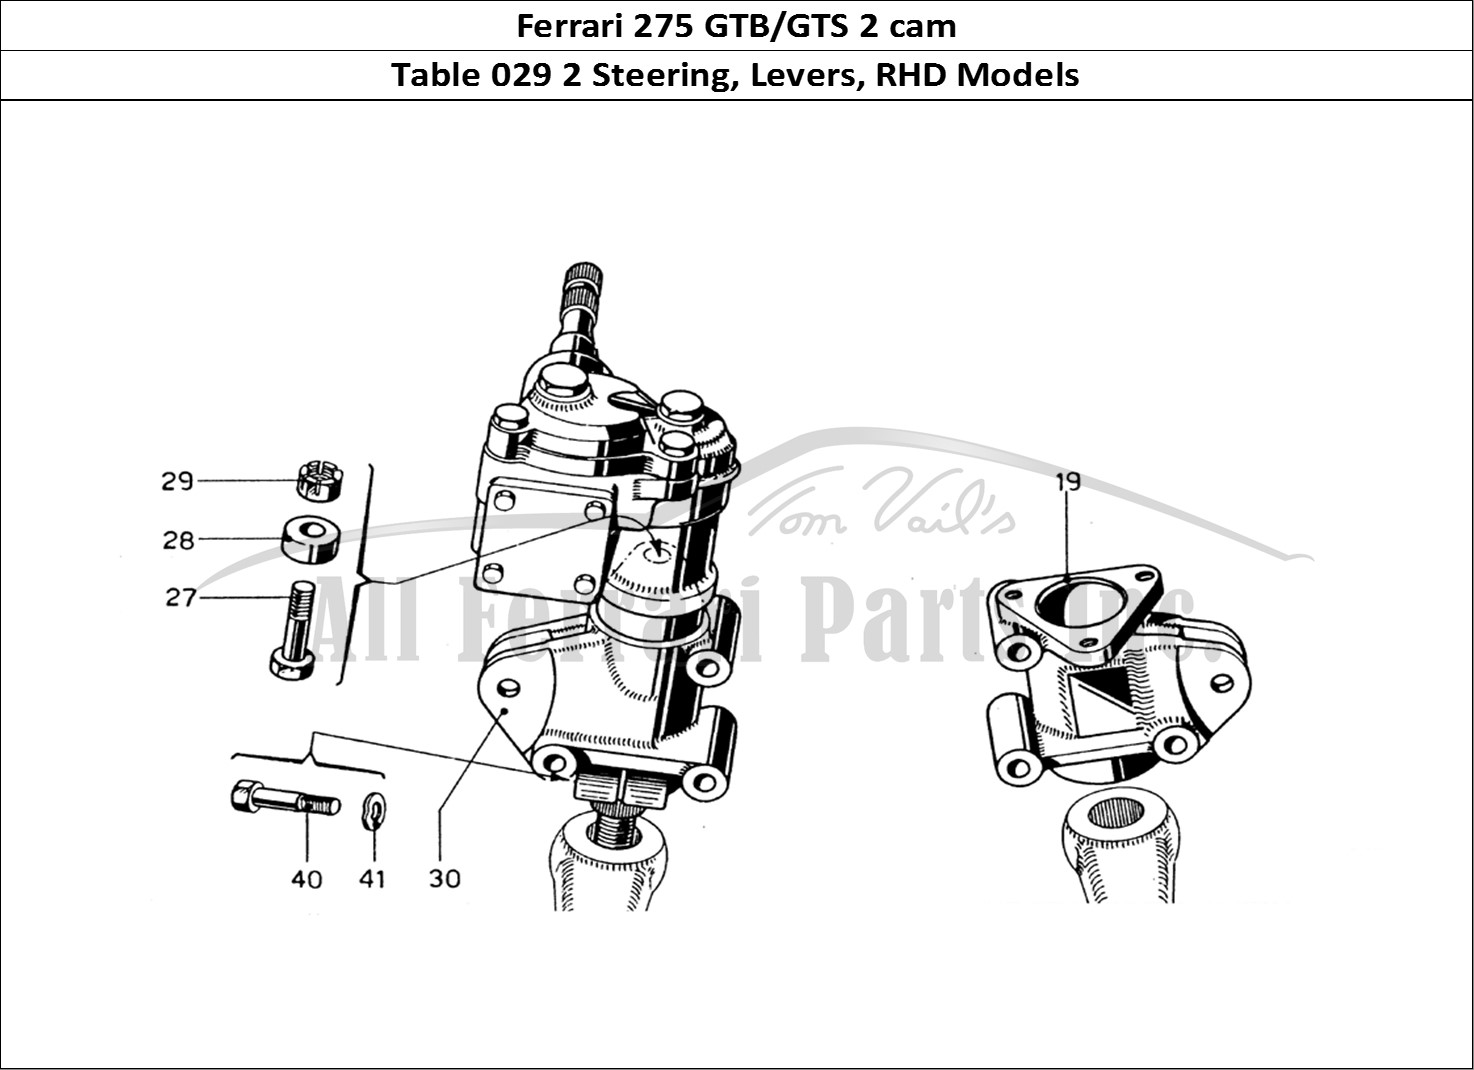 Ferrari Parts Ferrari 275 GTB/GTS 2 cam Page 029 Steering & Levers - Right